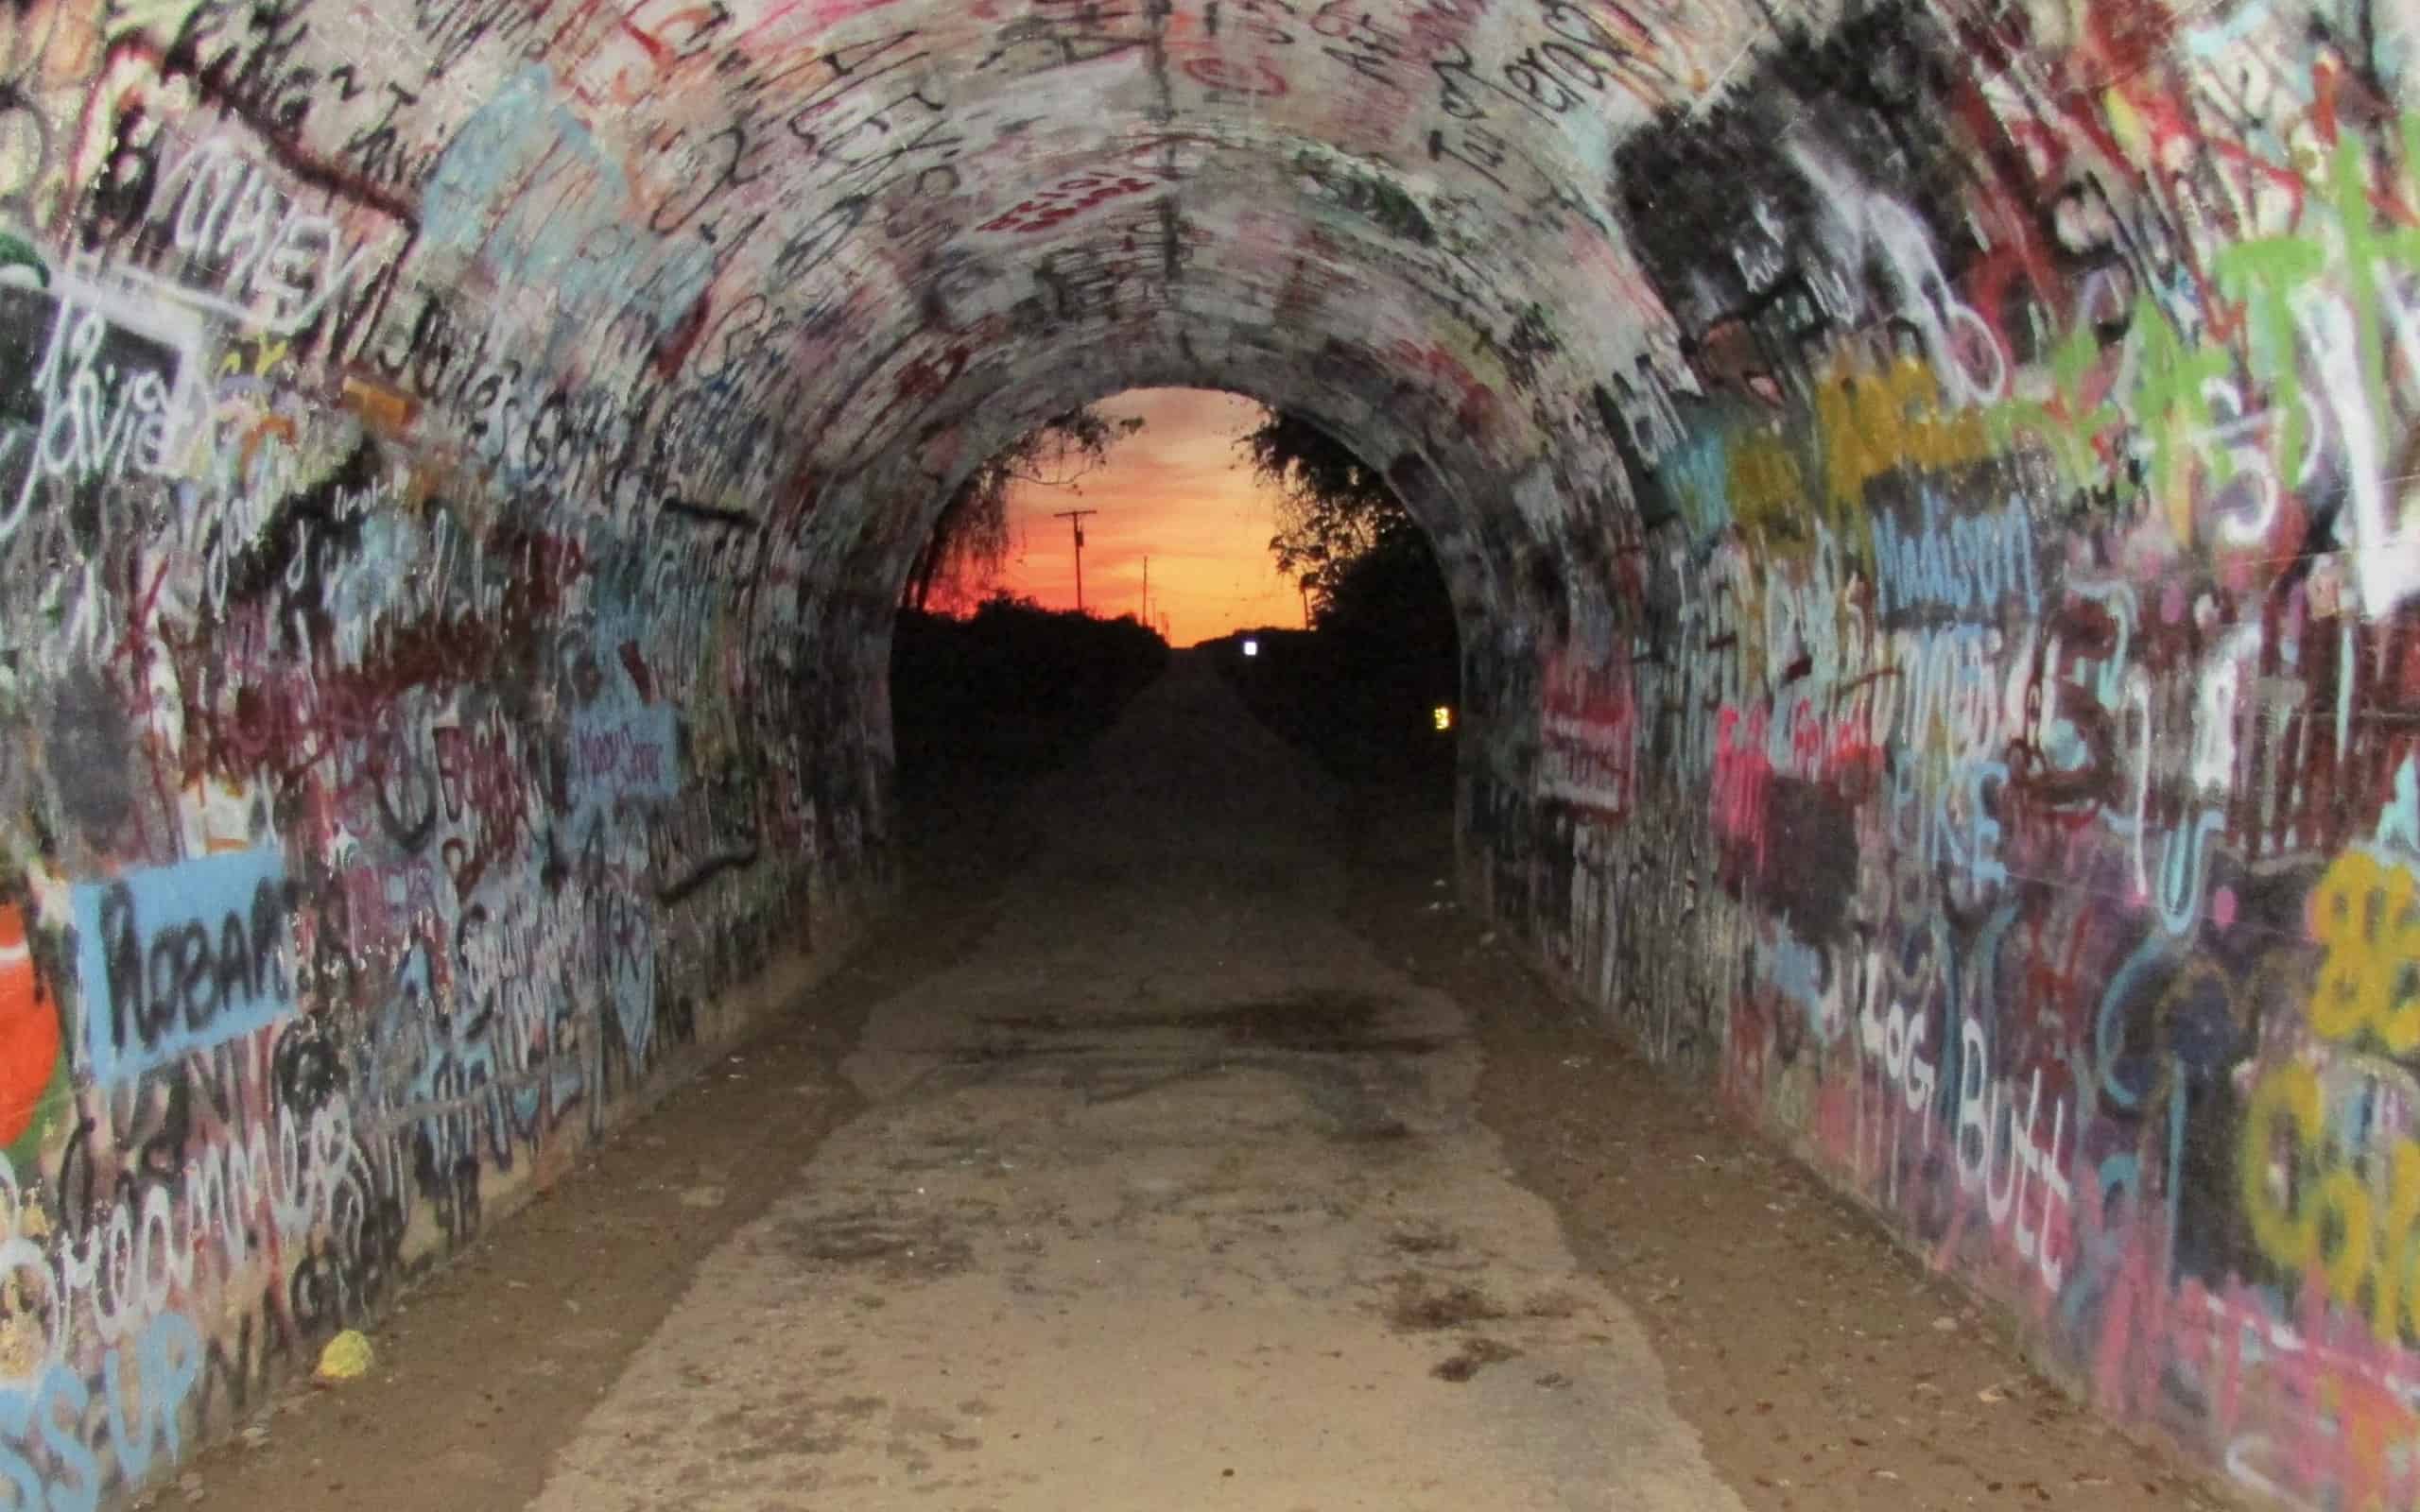 The Frostproof Grafitti Tunnel at sunset.